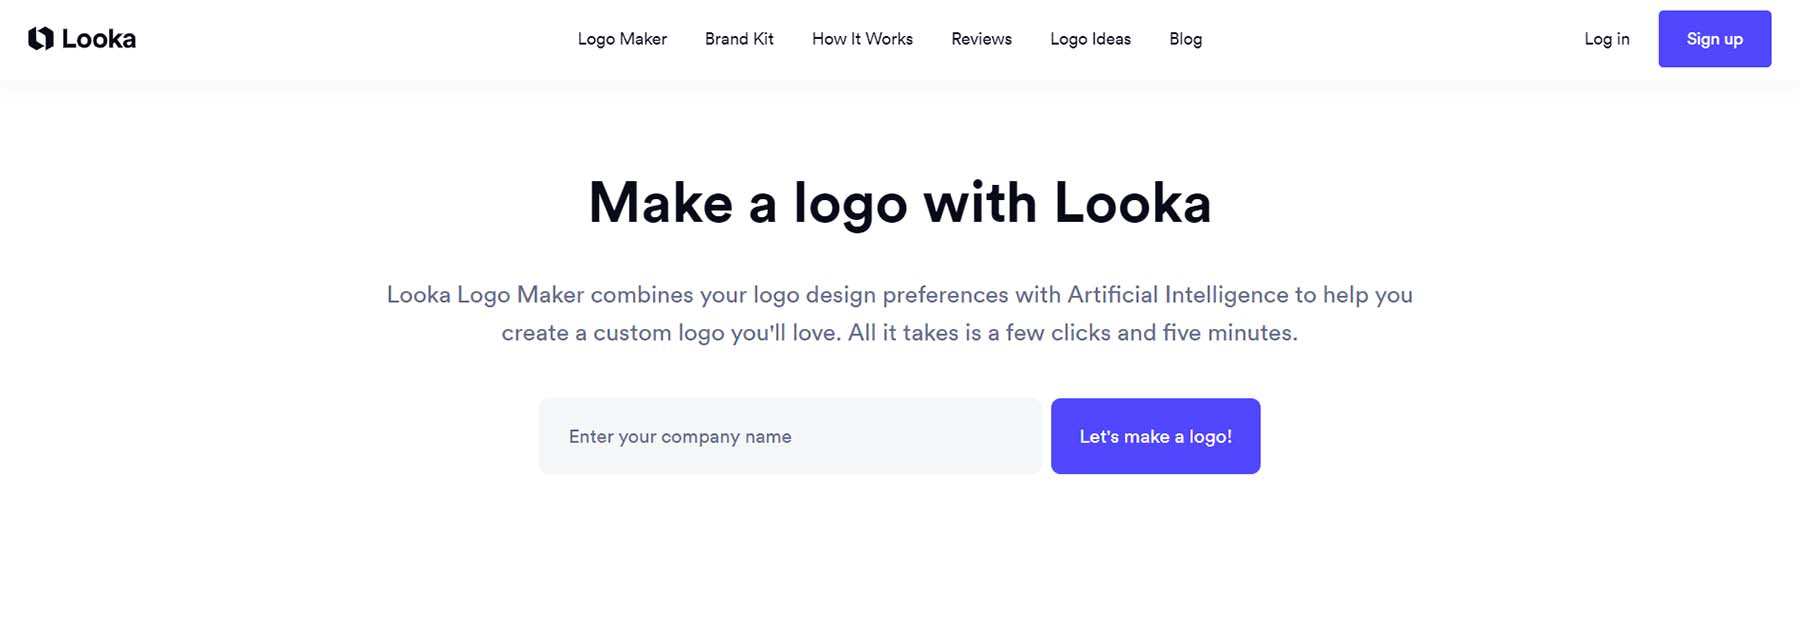 How to create a simplistic logo - Art Design Support - Developer Forum